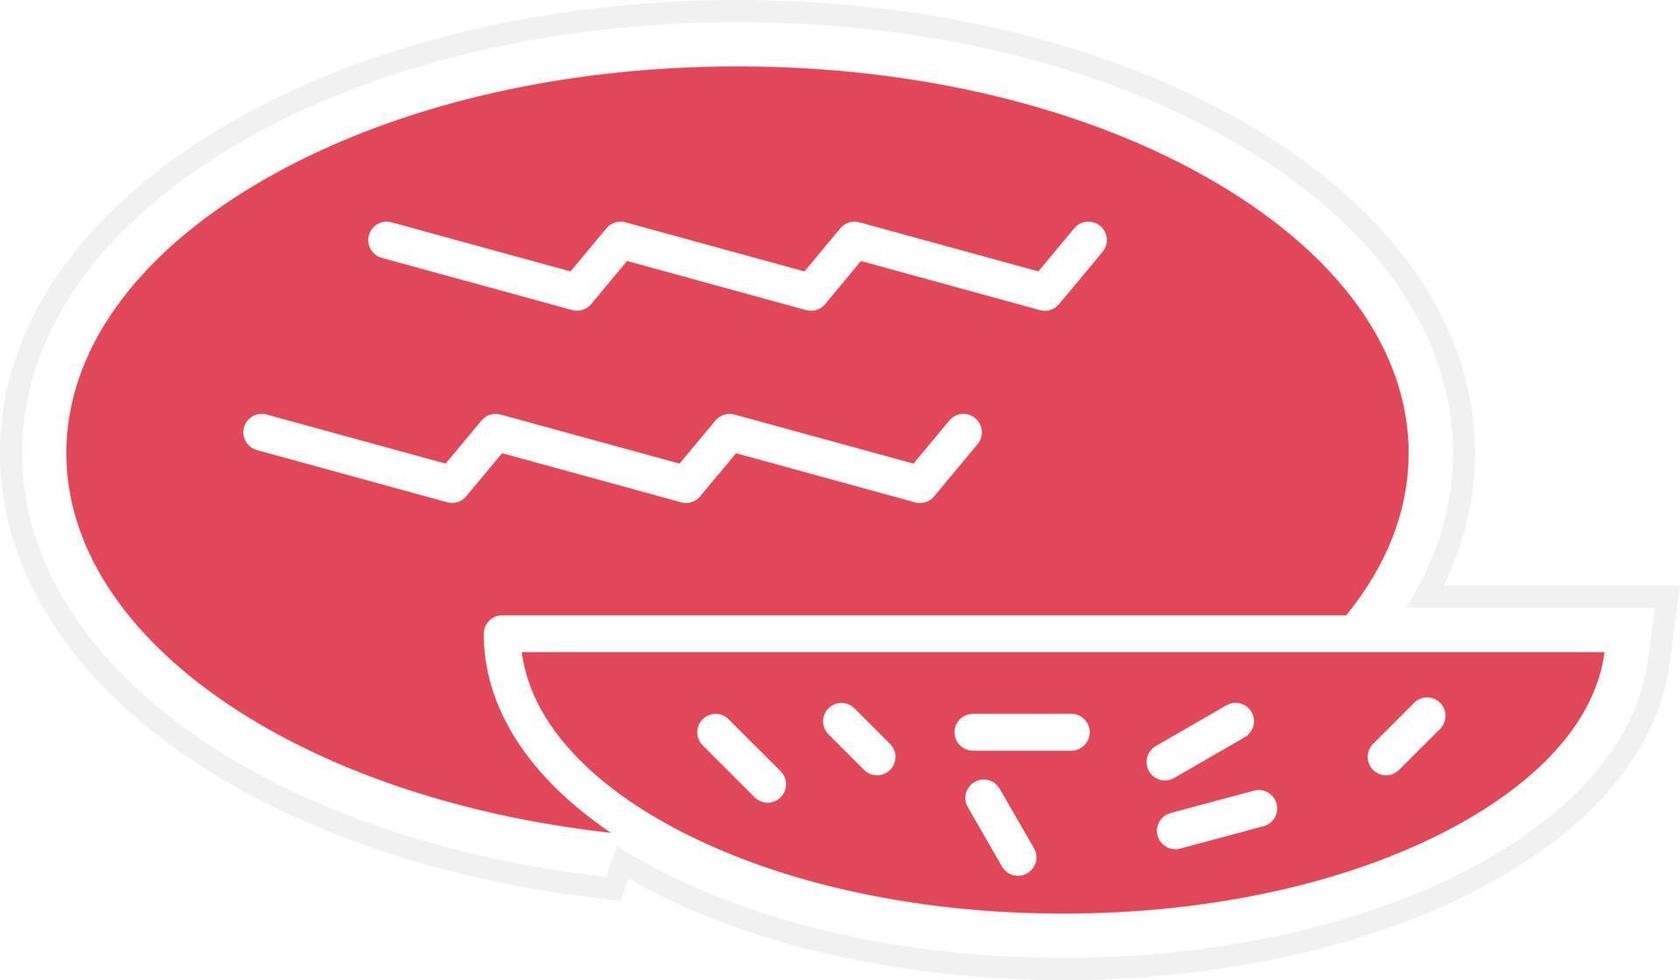 Watermelon Icon Style vector